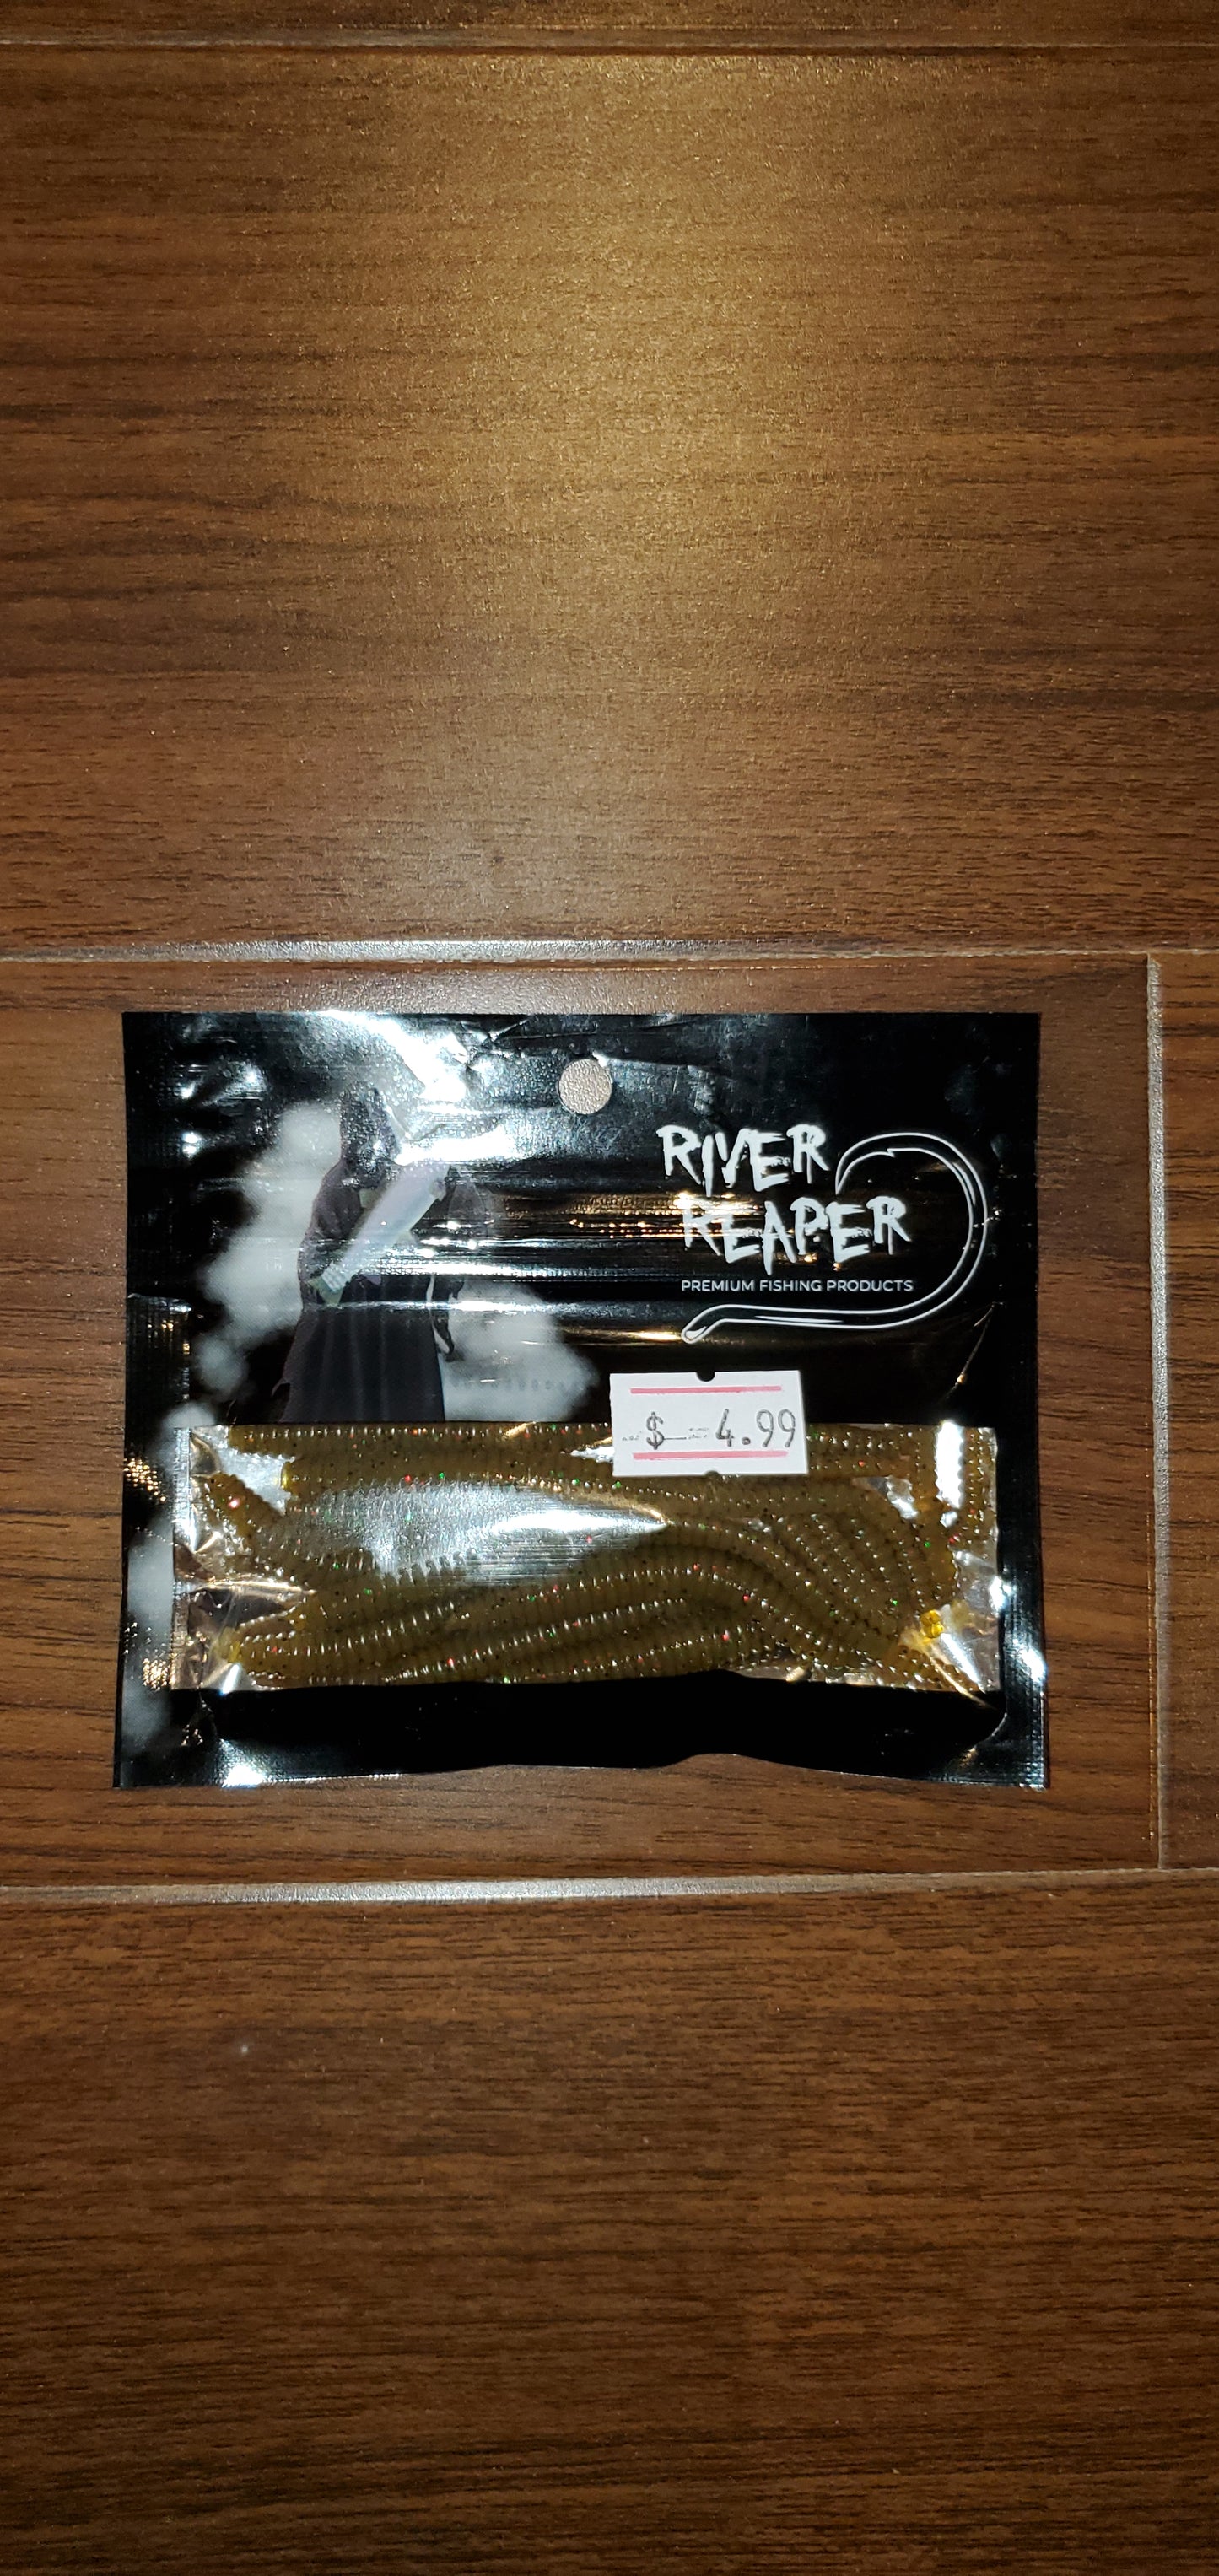 River Reaper Soft Worm Natural color